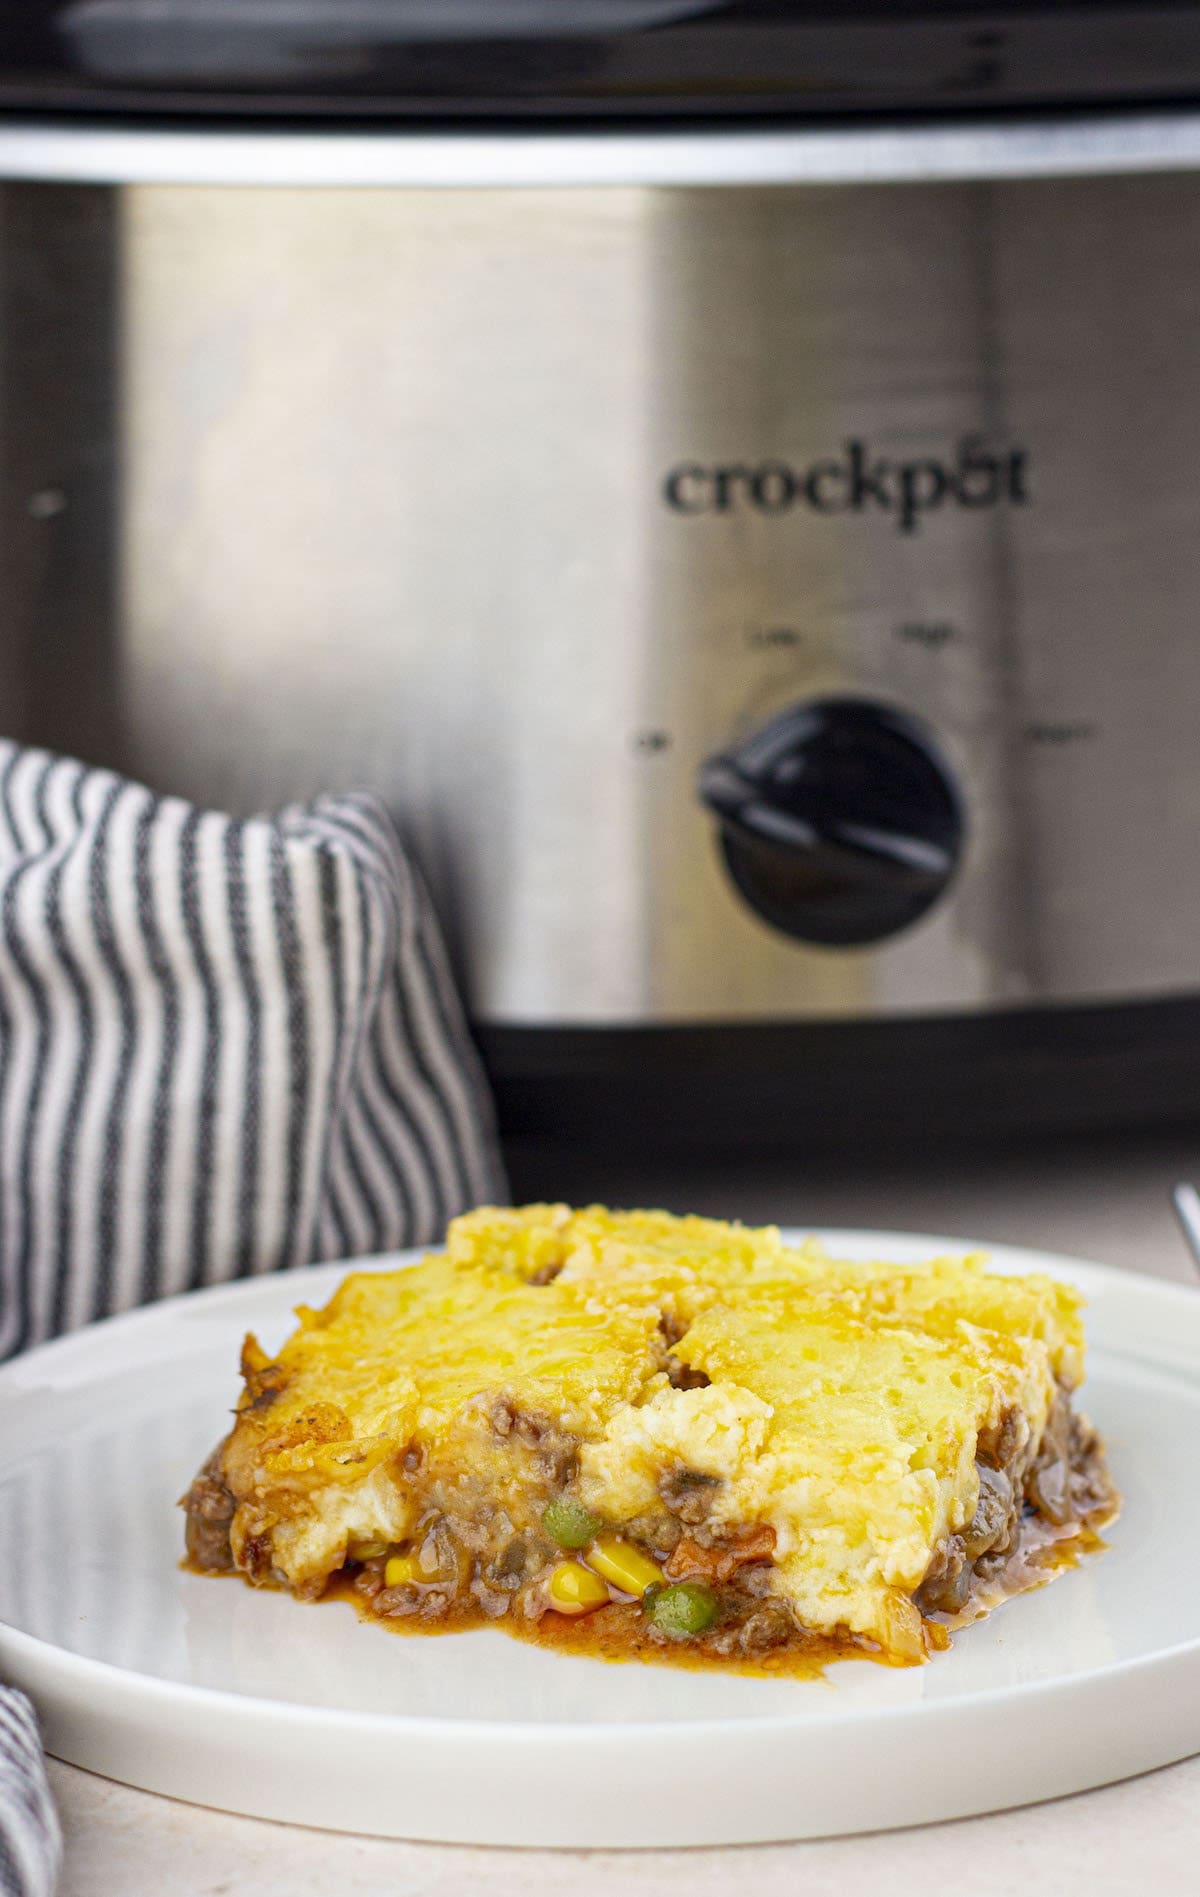 Crockpot Shepherd’s Pie Recipe